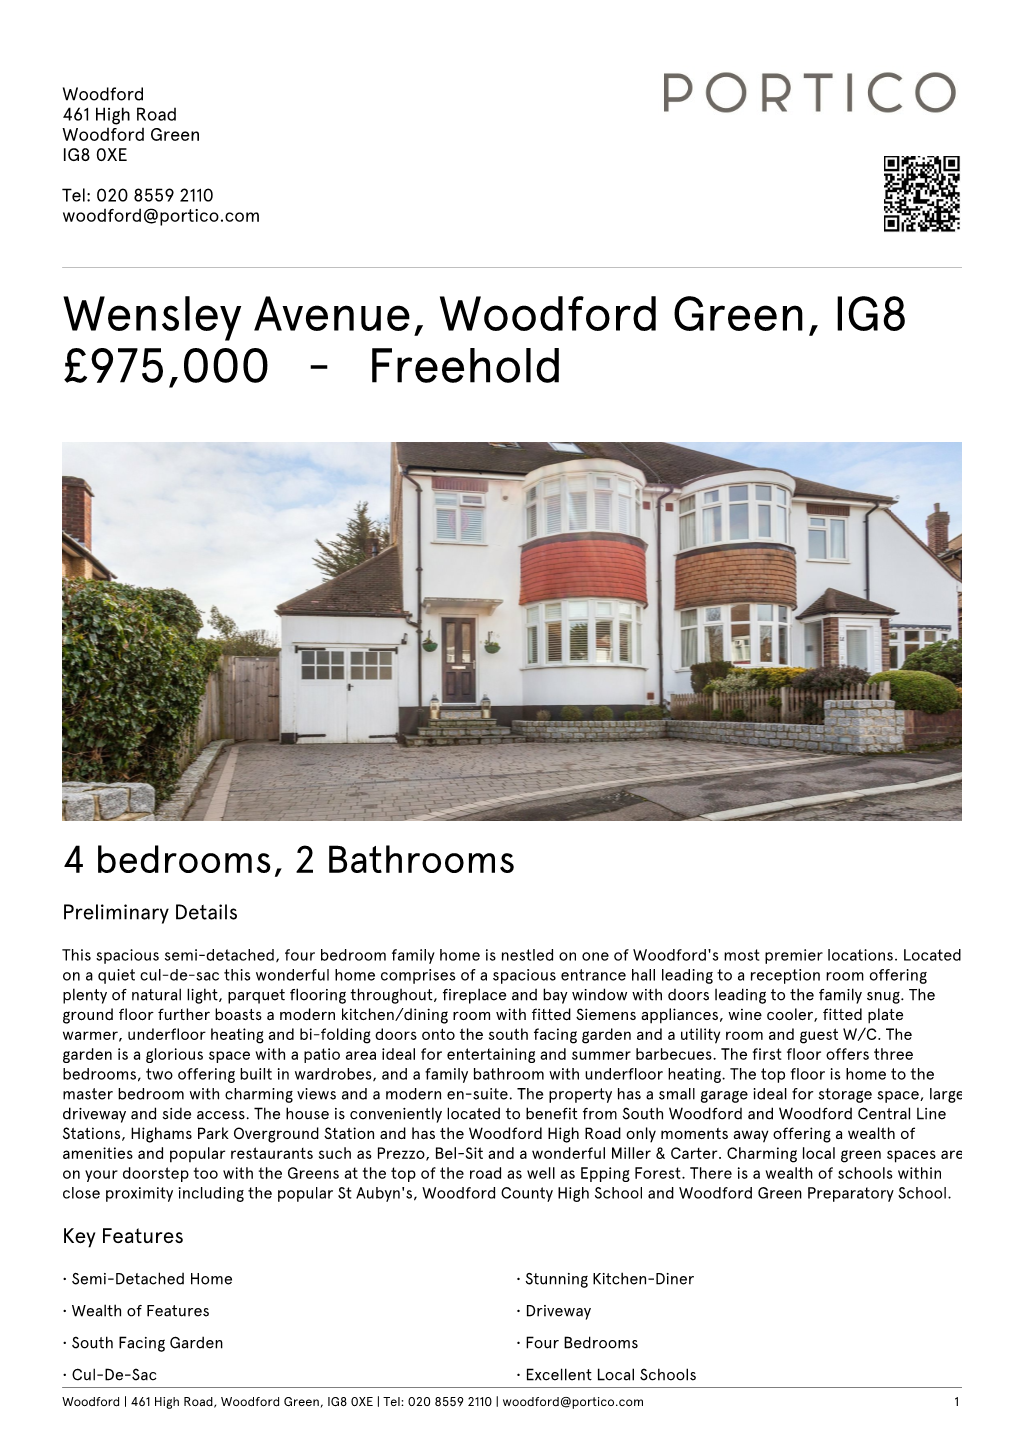 Wensley Avenue, Woodford Green, IG8 £975,000